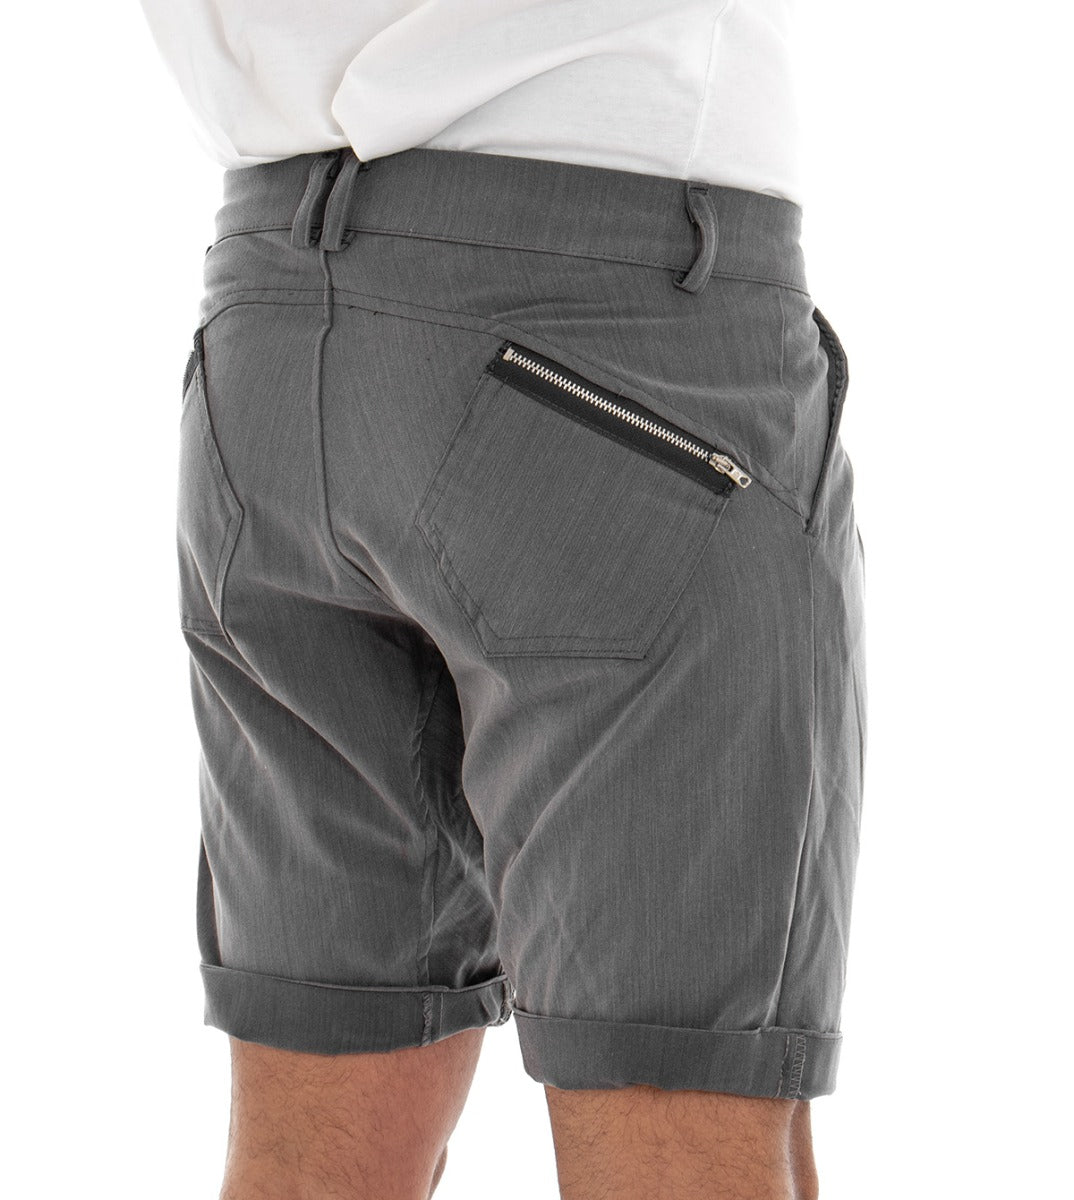 Bermuda Short Men's Shorts America Pocket Gray Pence Low Crotch GIOSAL-PC1298A